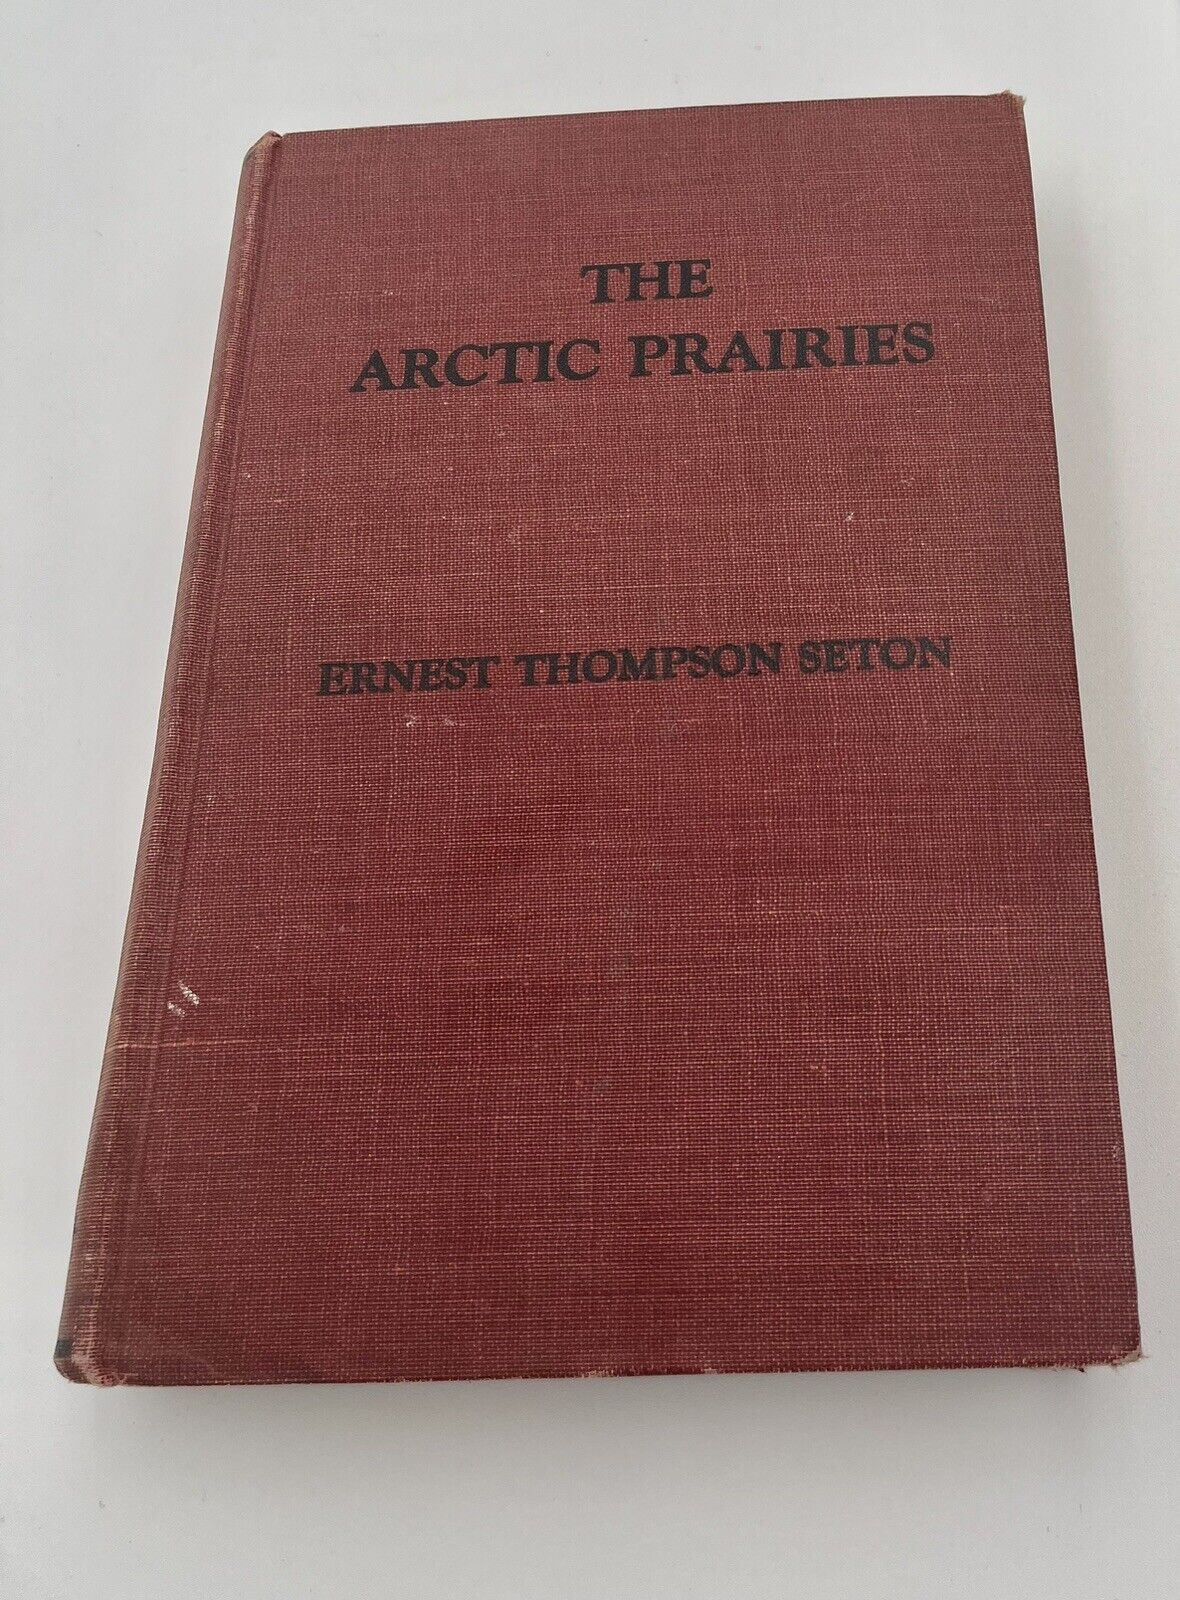 Very Rare Ernest Thompson Seton “ The Arctic Prairies”